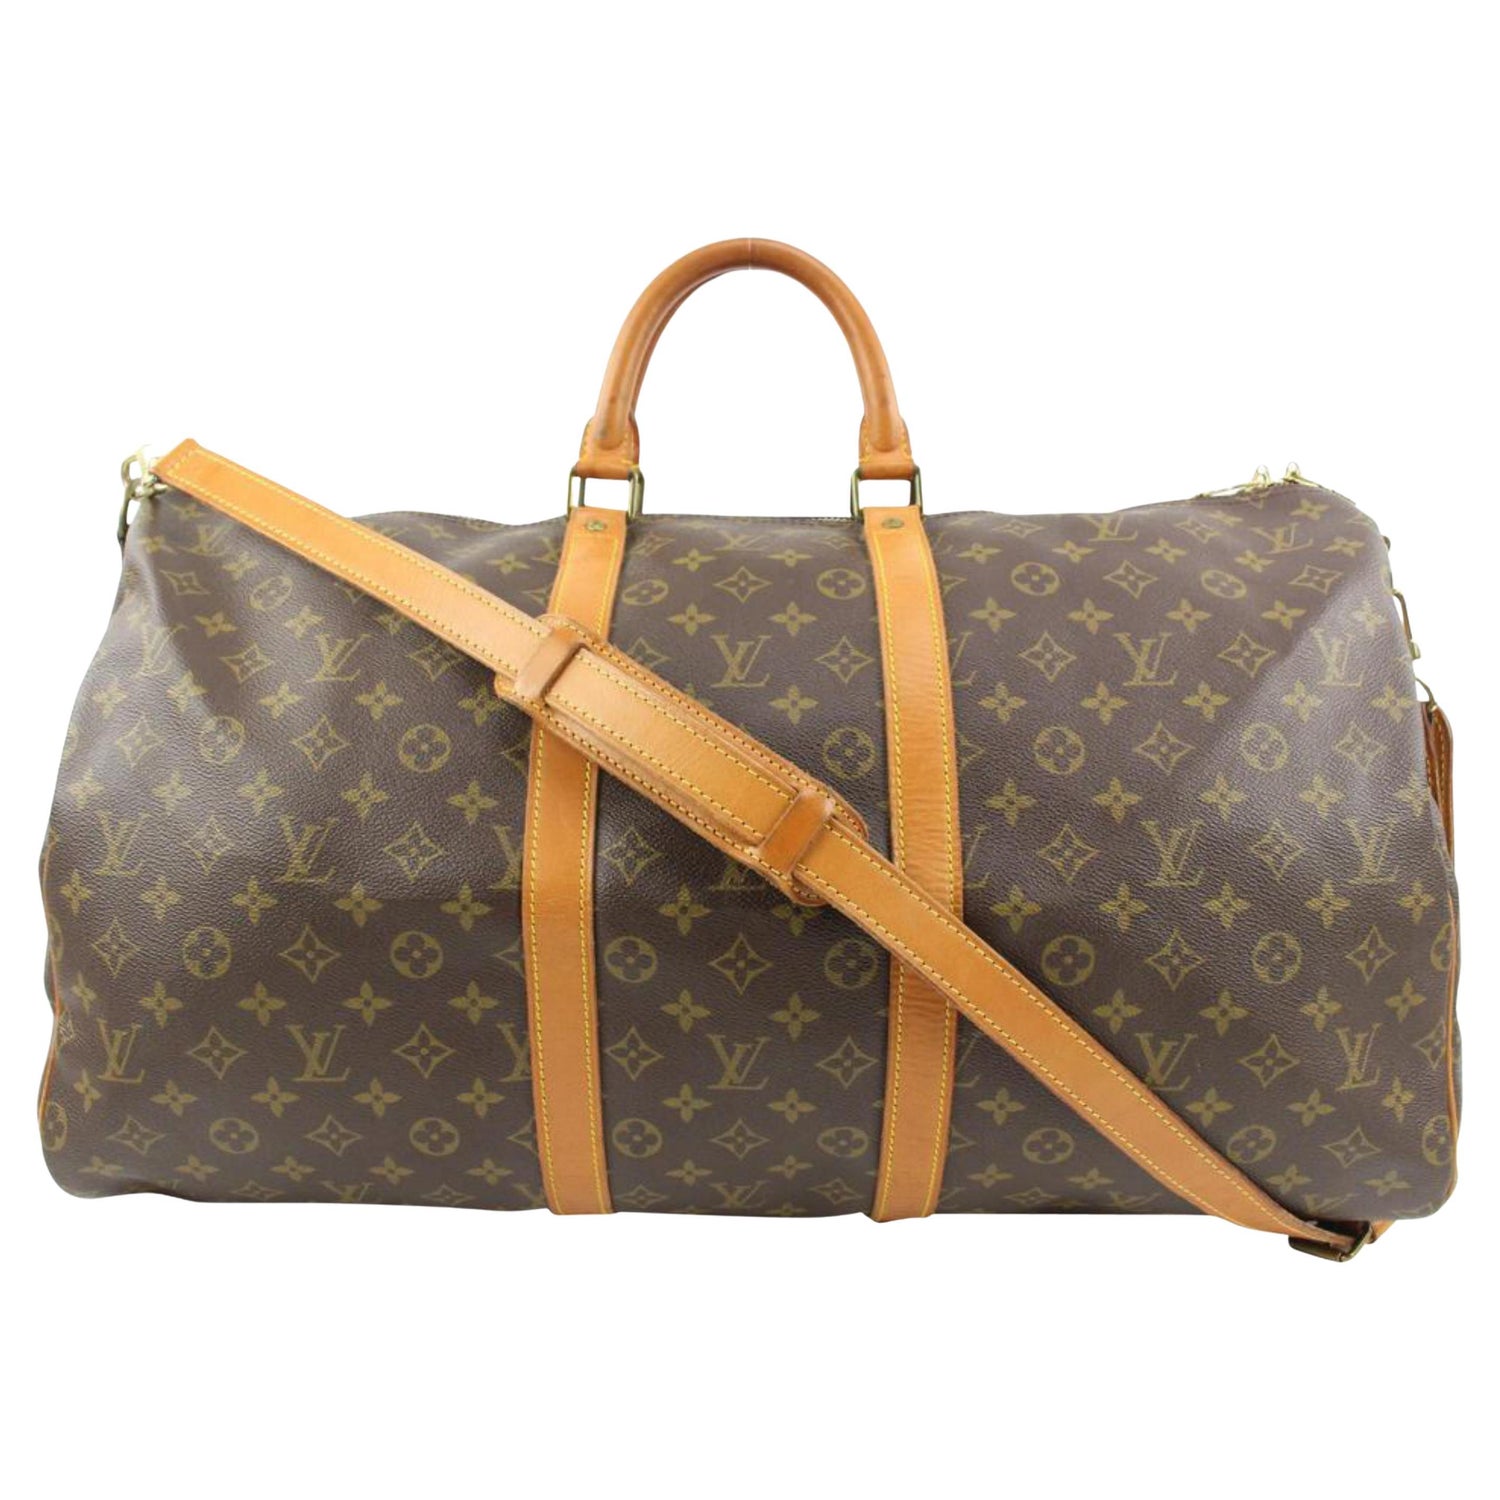 Louis Vuitton Bag Plane - For Sale on 1stDibs